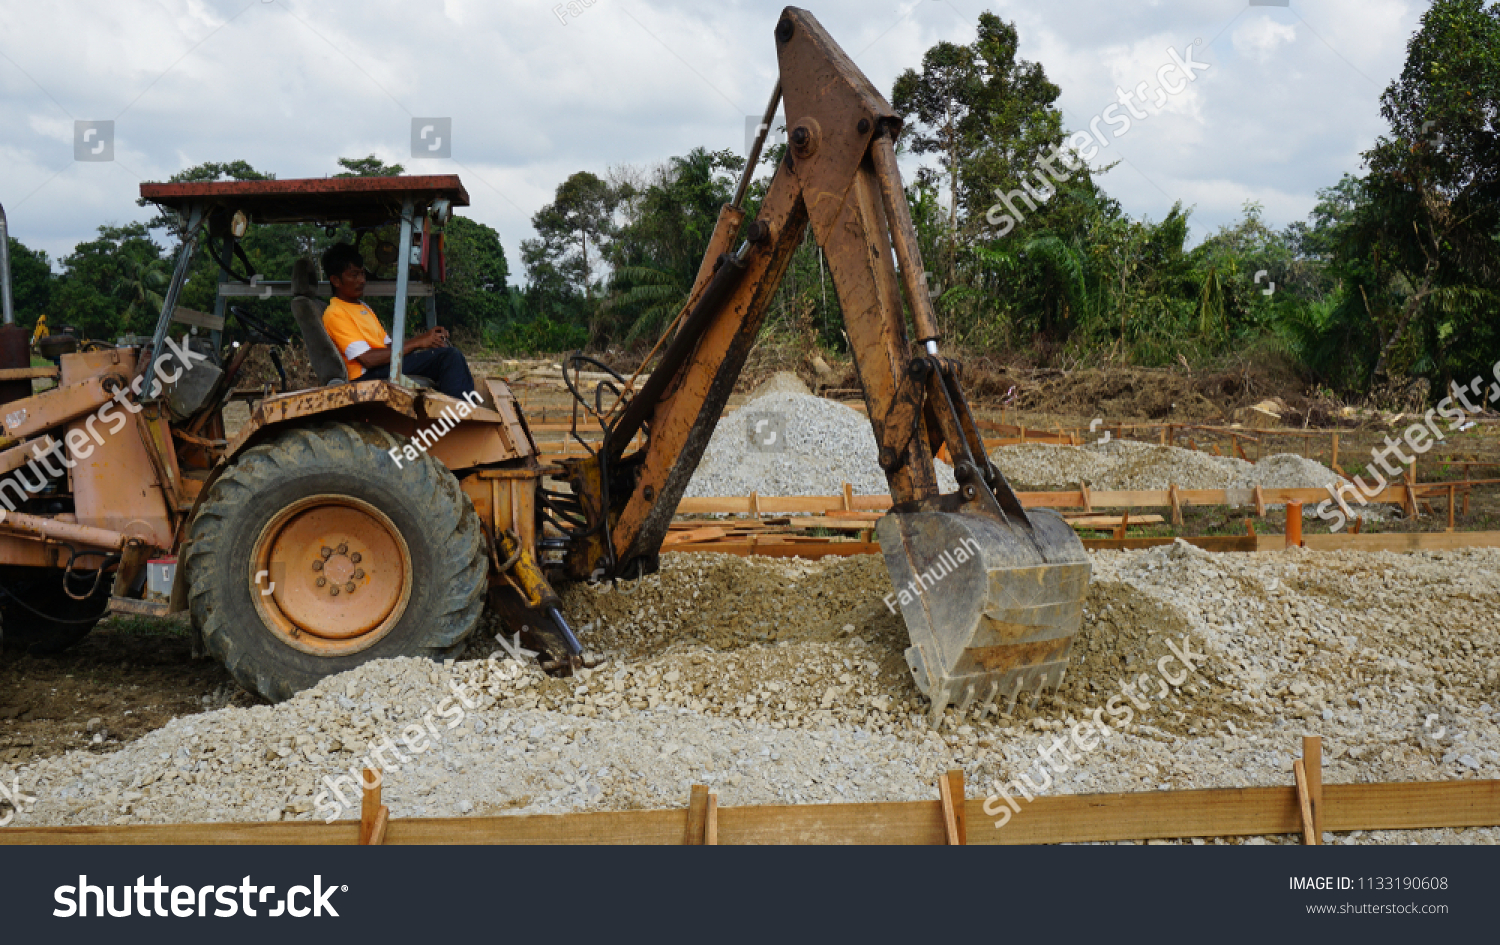 12 June 2018 Perak Malaysia Excavator Stock Photo Edit Now 1133190608